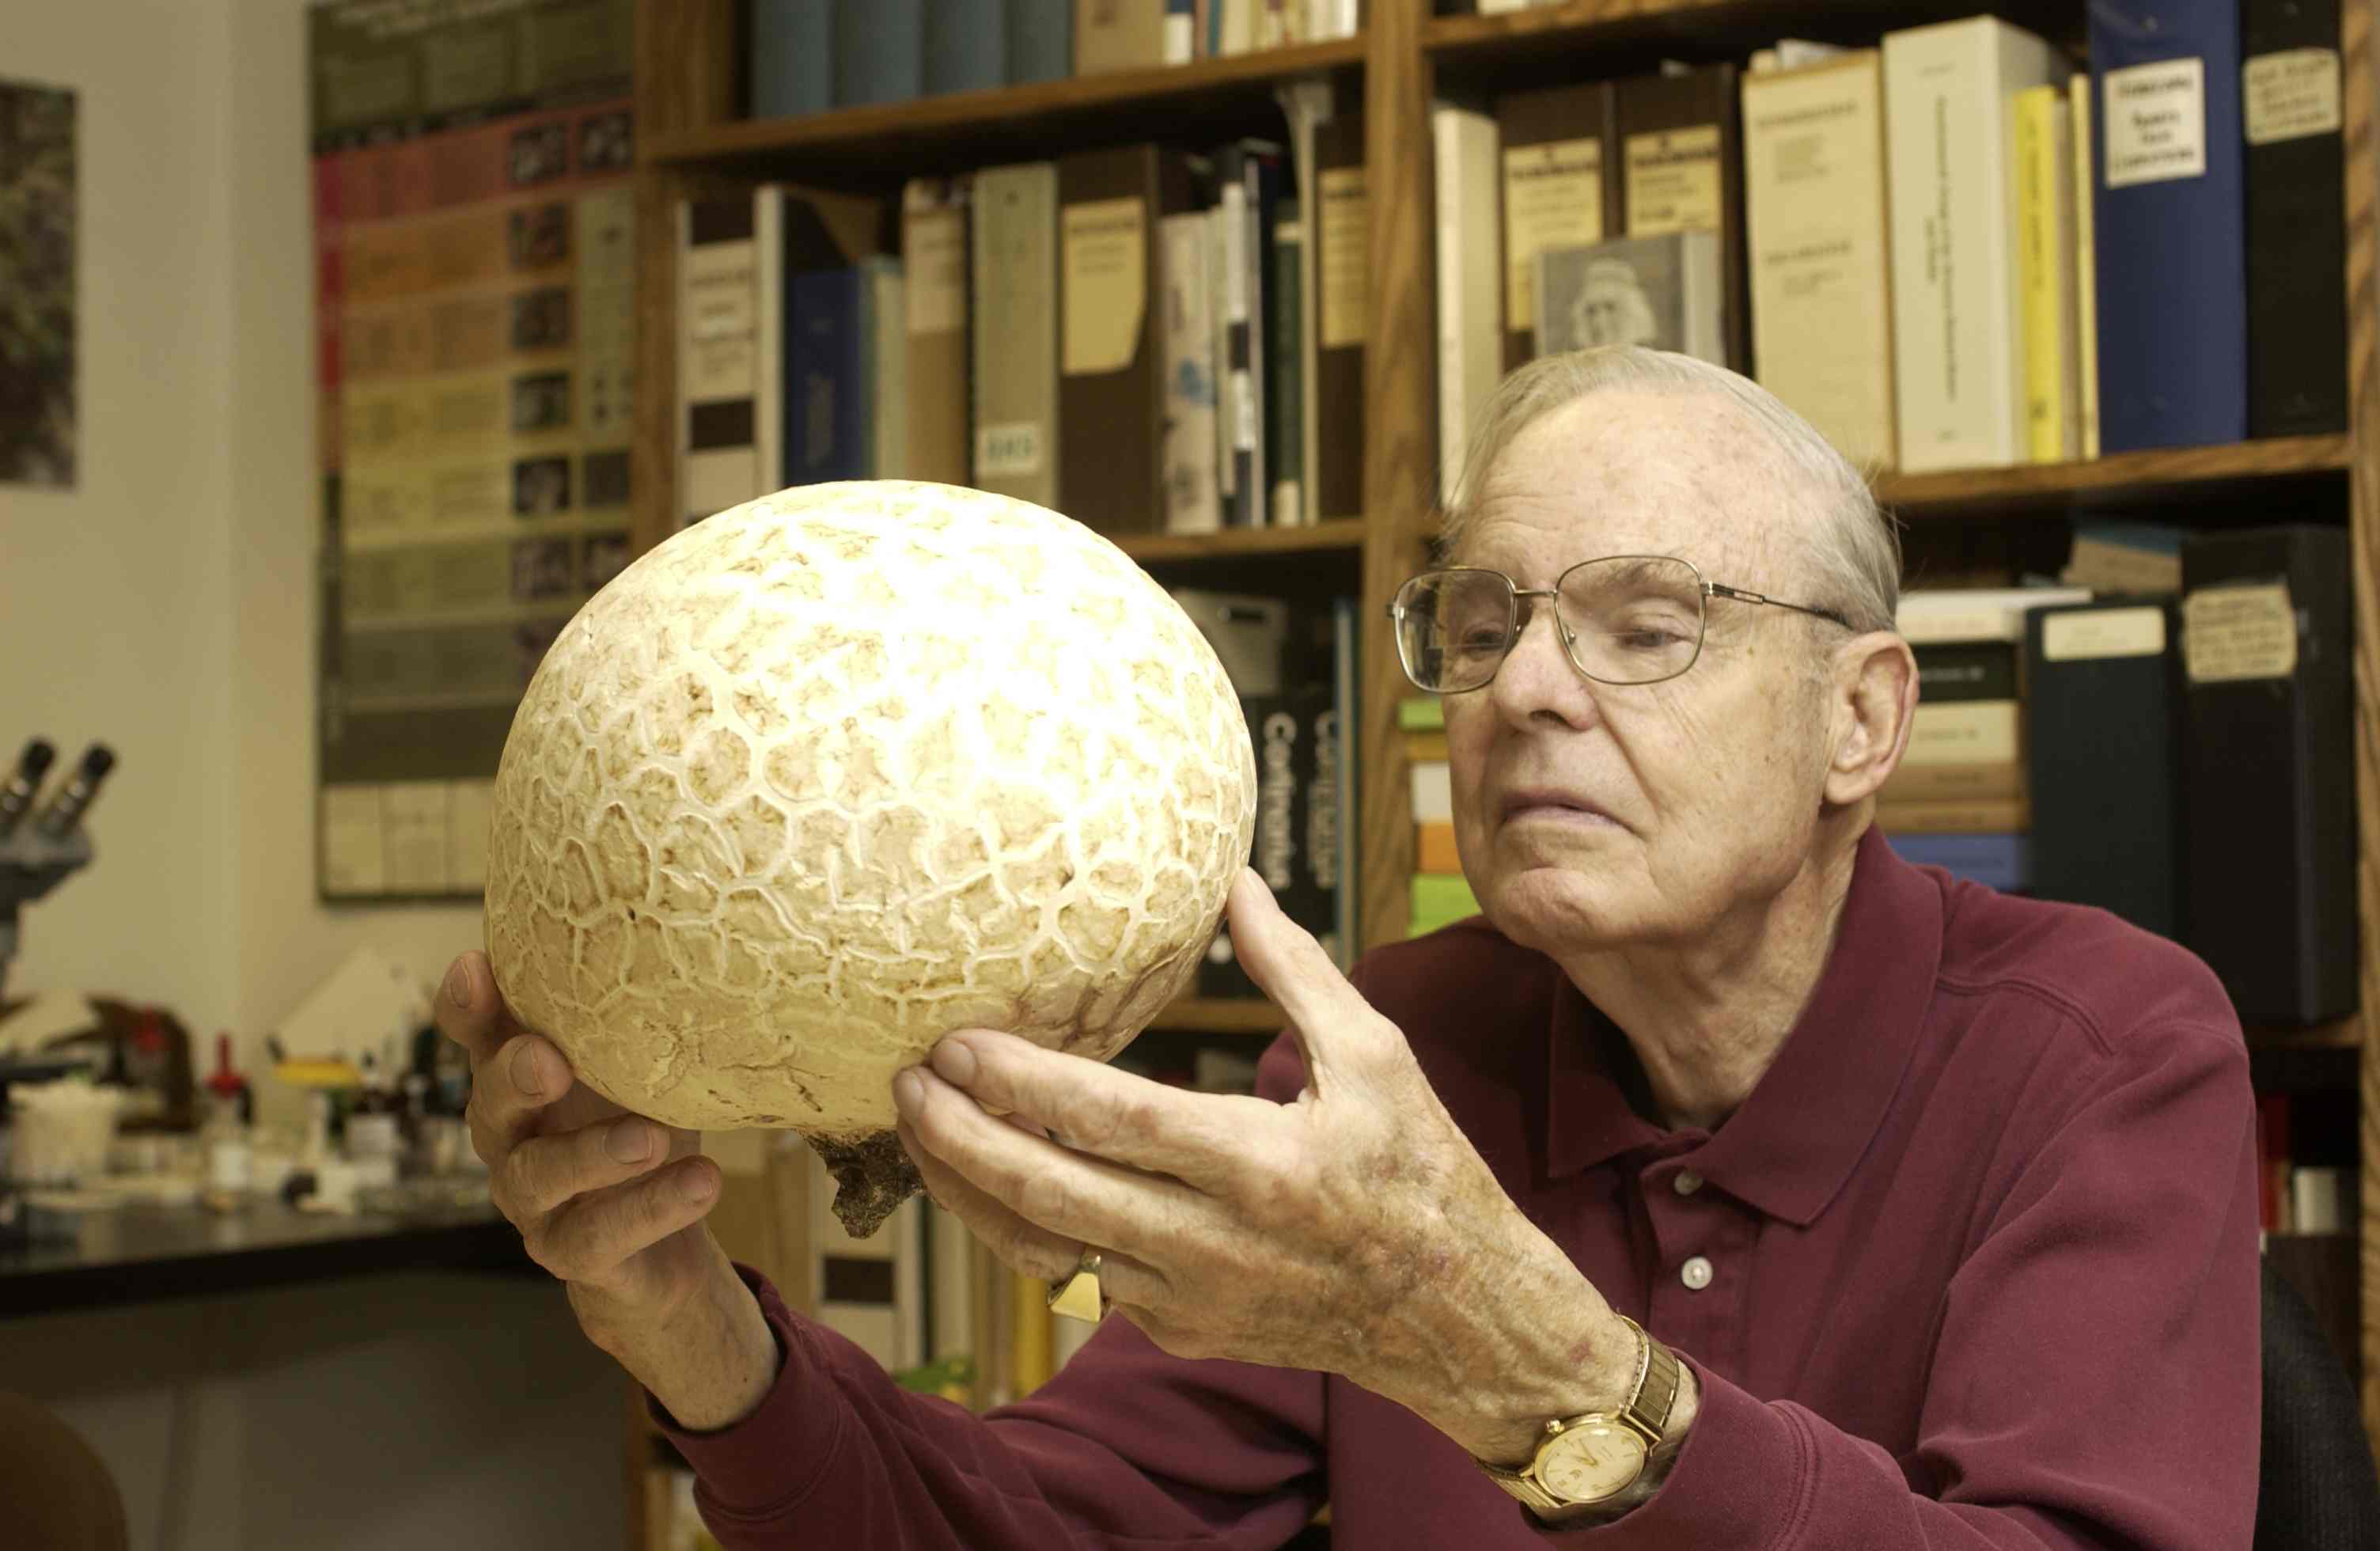 A puffball species being held by Bob Brace, a former herbarium volunteer